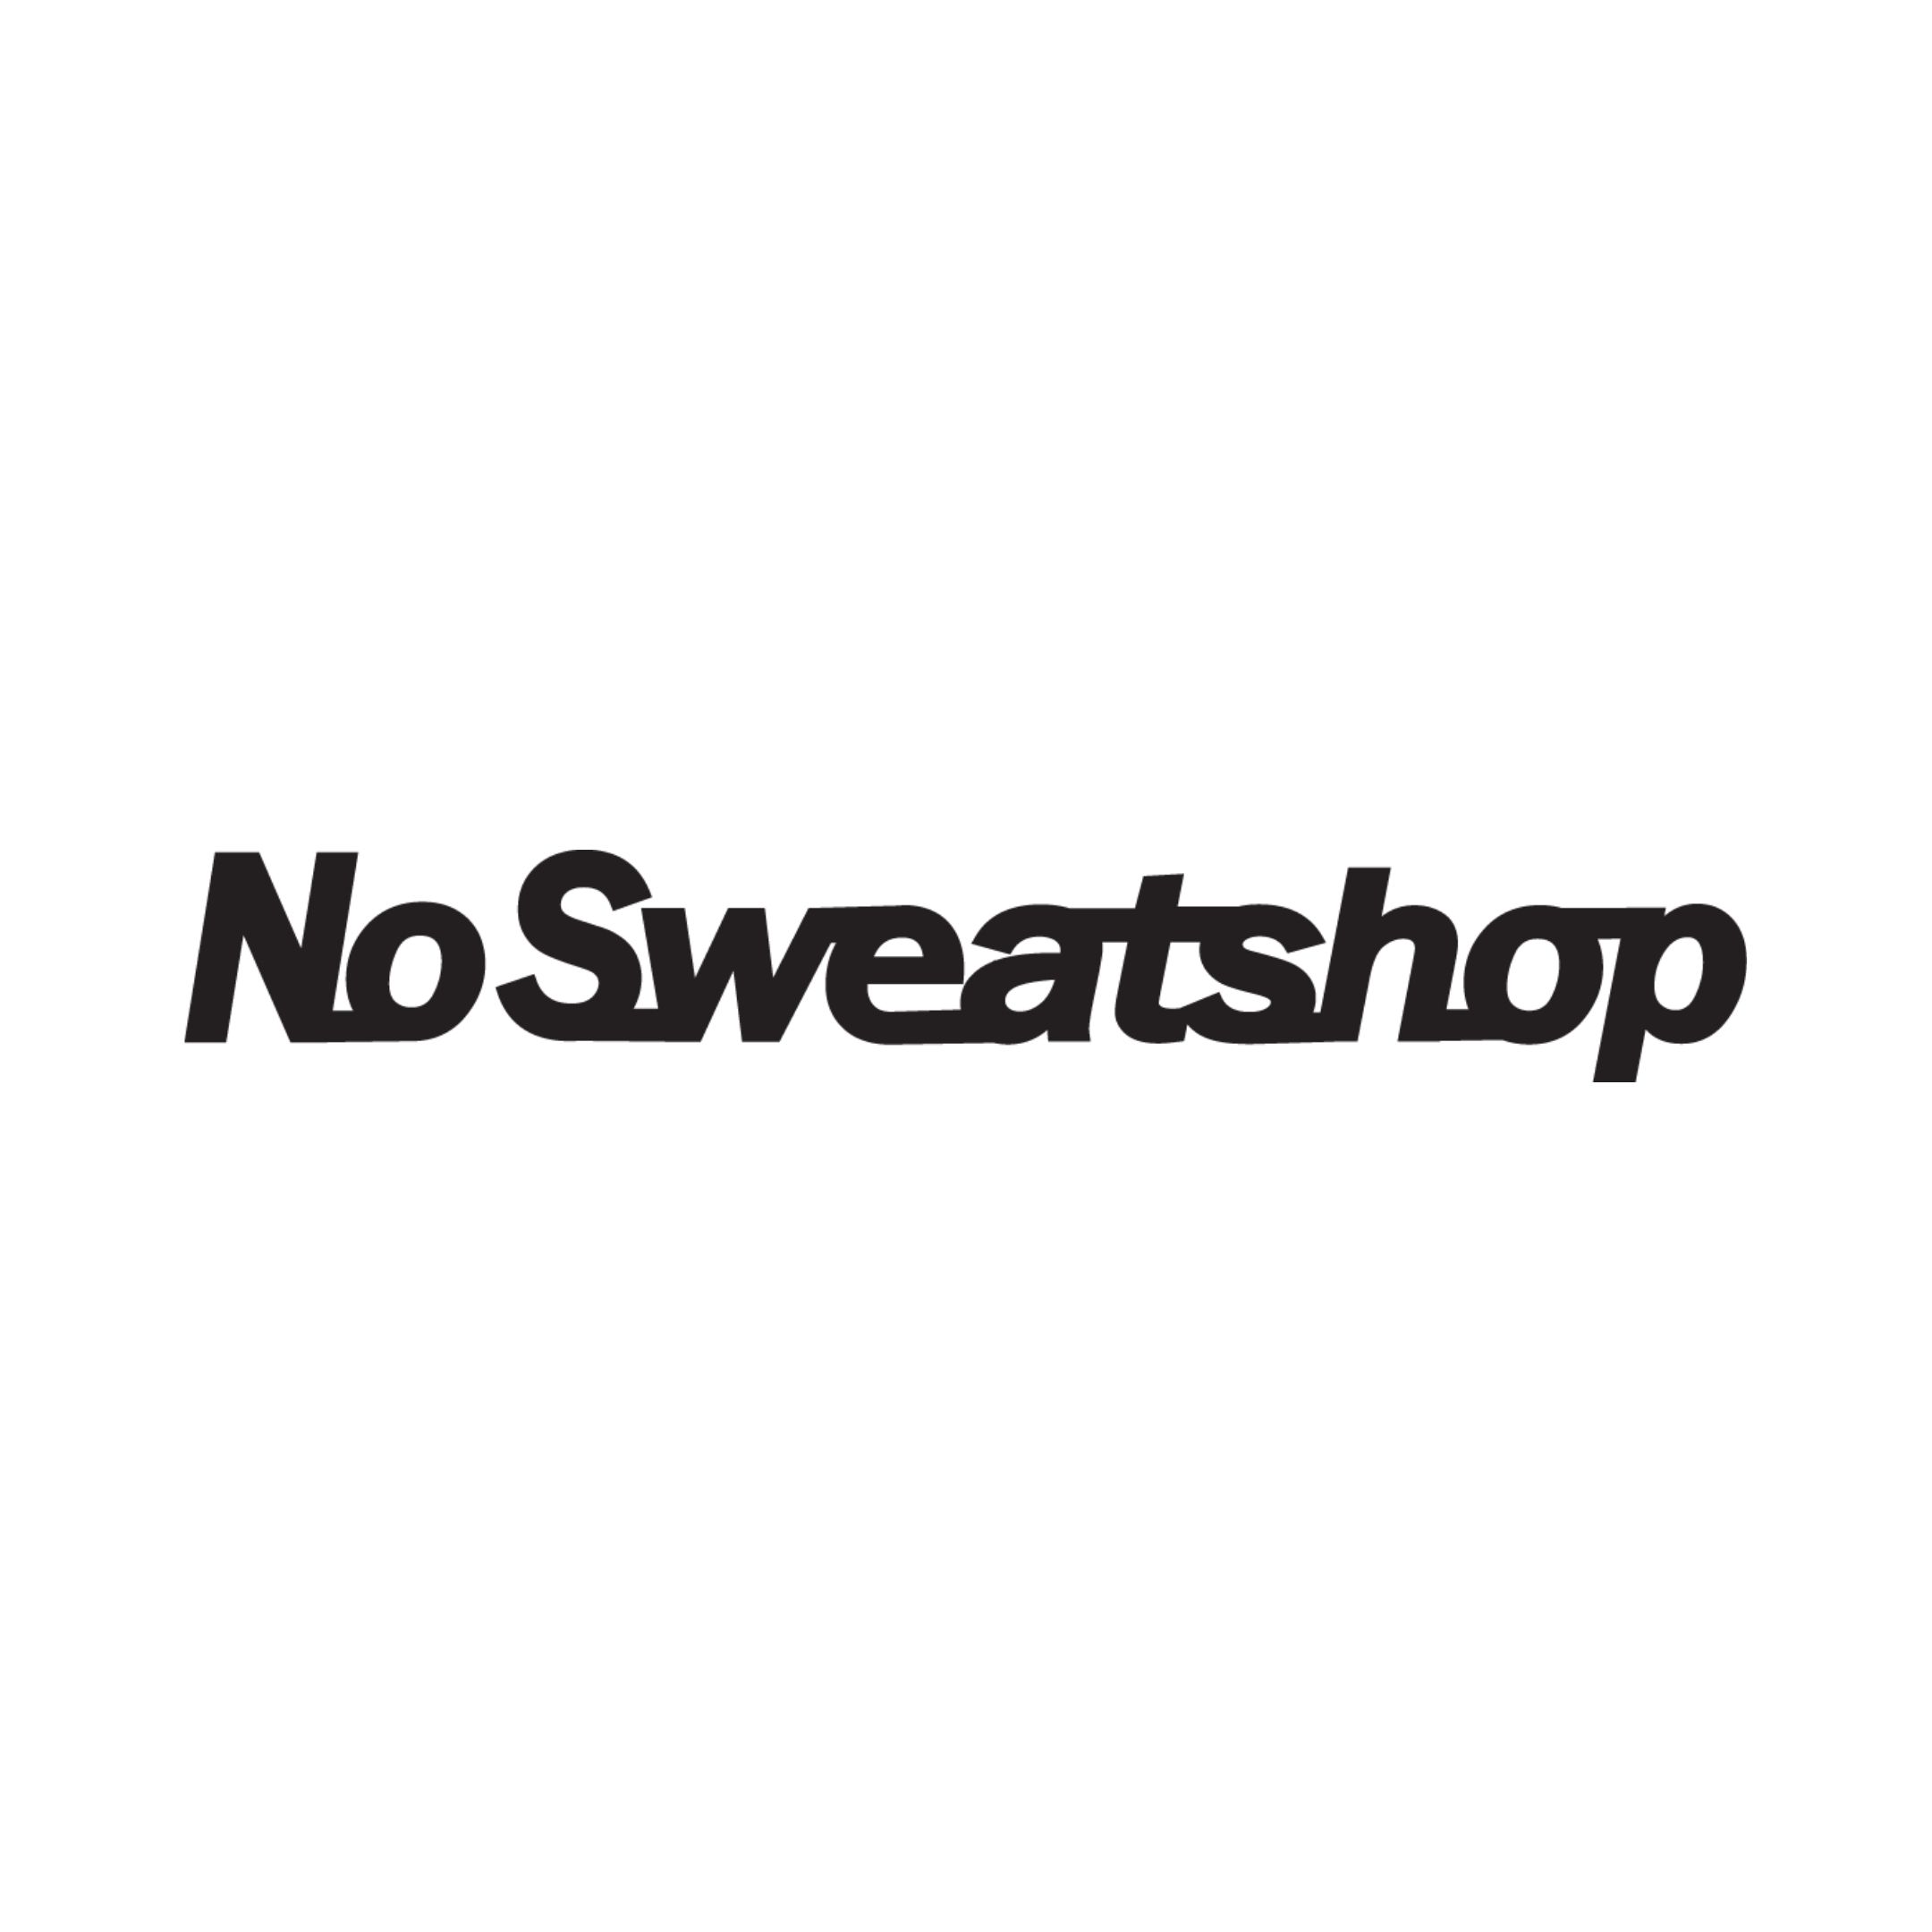 No Sweatshop – die visionäre Upcycling-Näherei